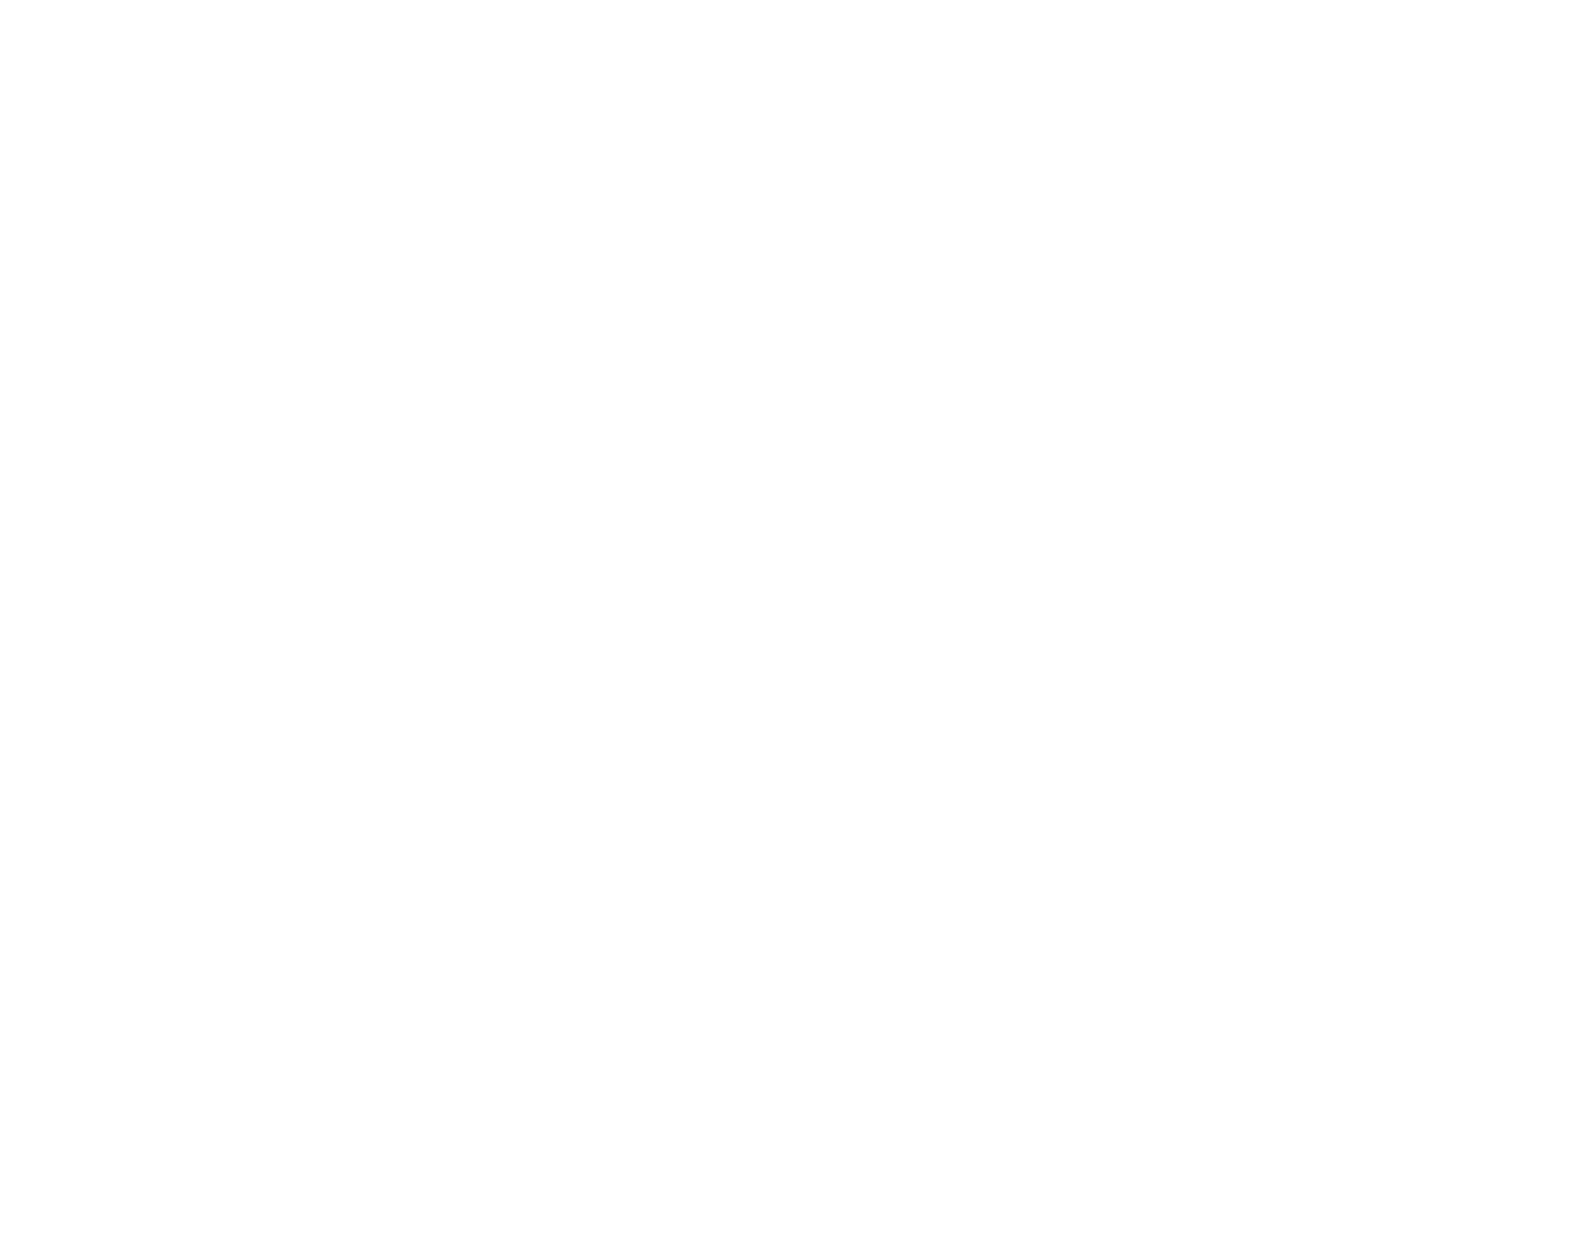 The Lottery Corporation logo pour fonds sombres (PNG transparent)